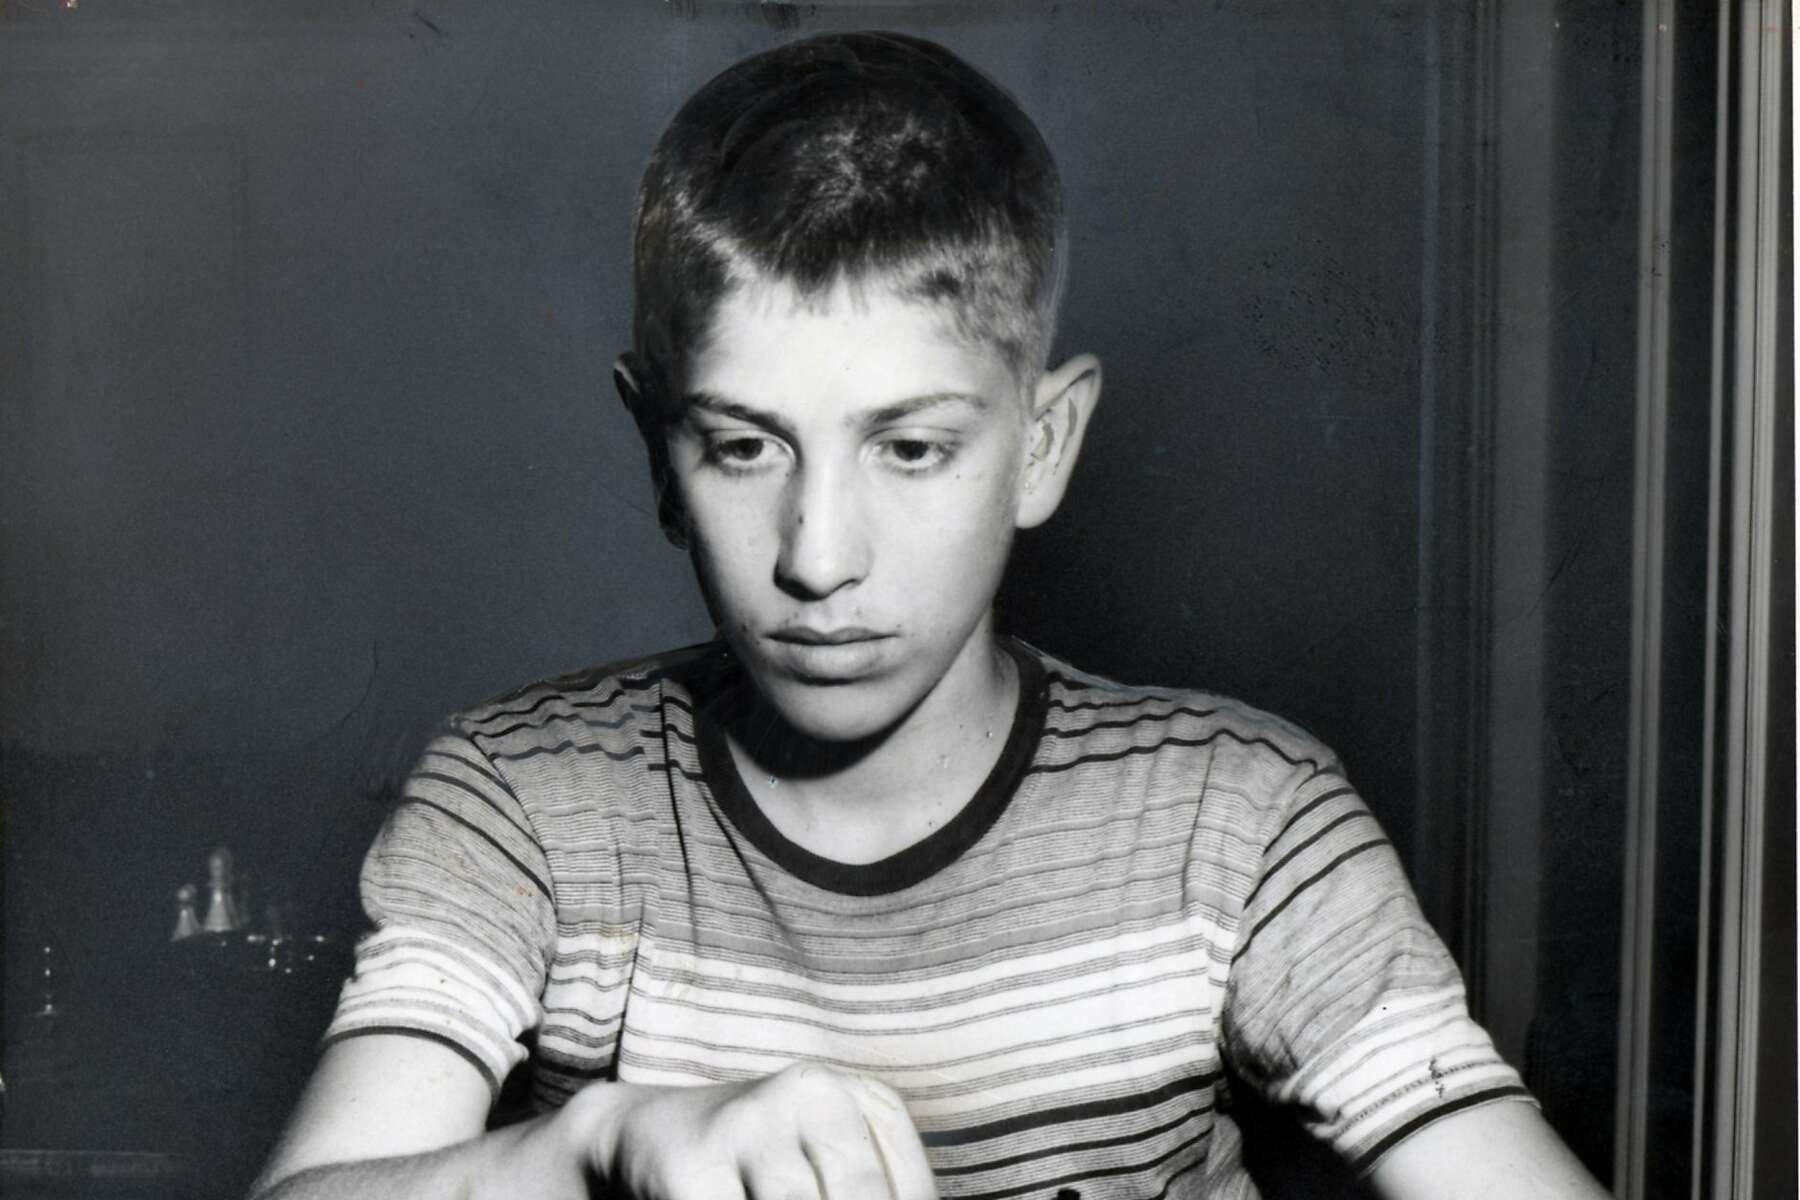 Bobby Fischer – Early Years « ChessManiac